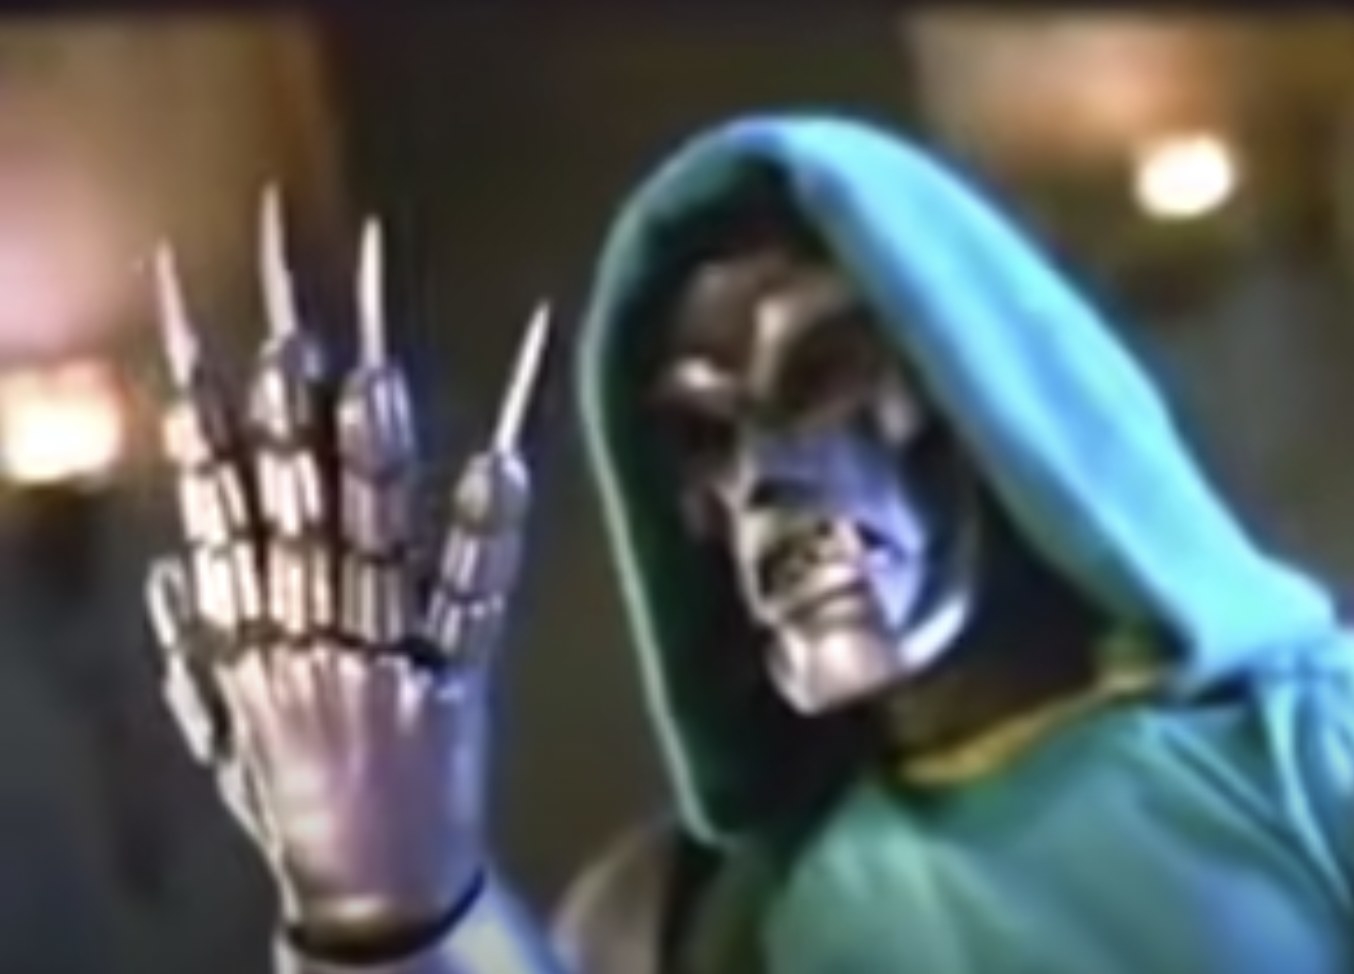 Doctor Doom has a claw-like glove